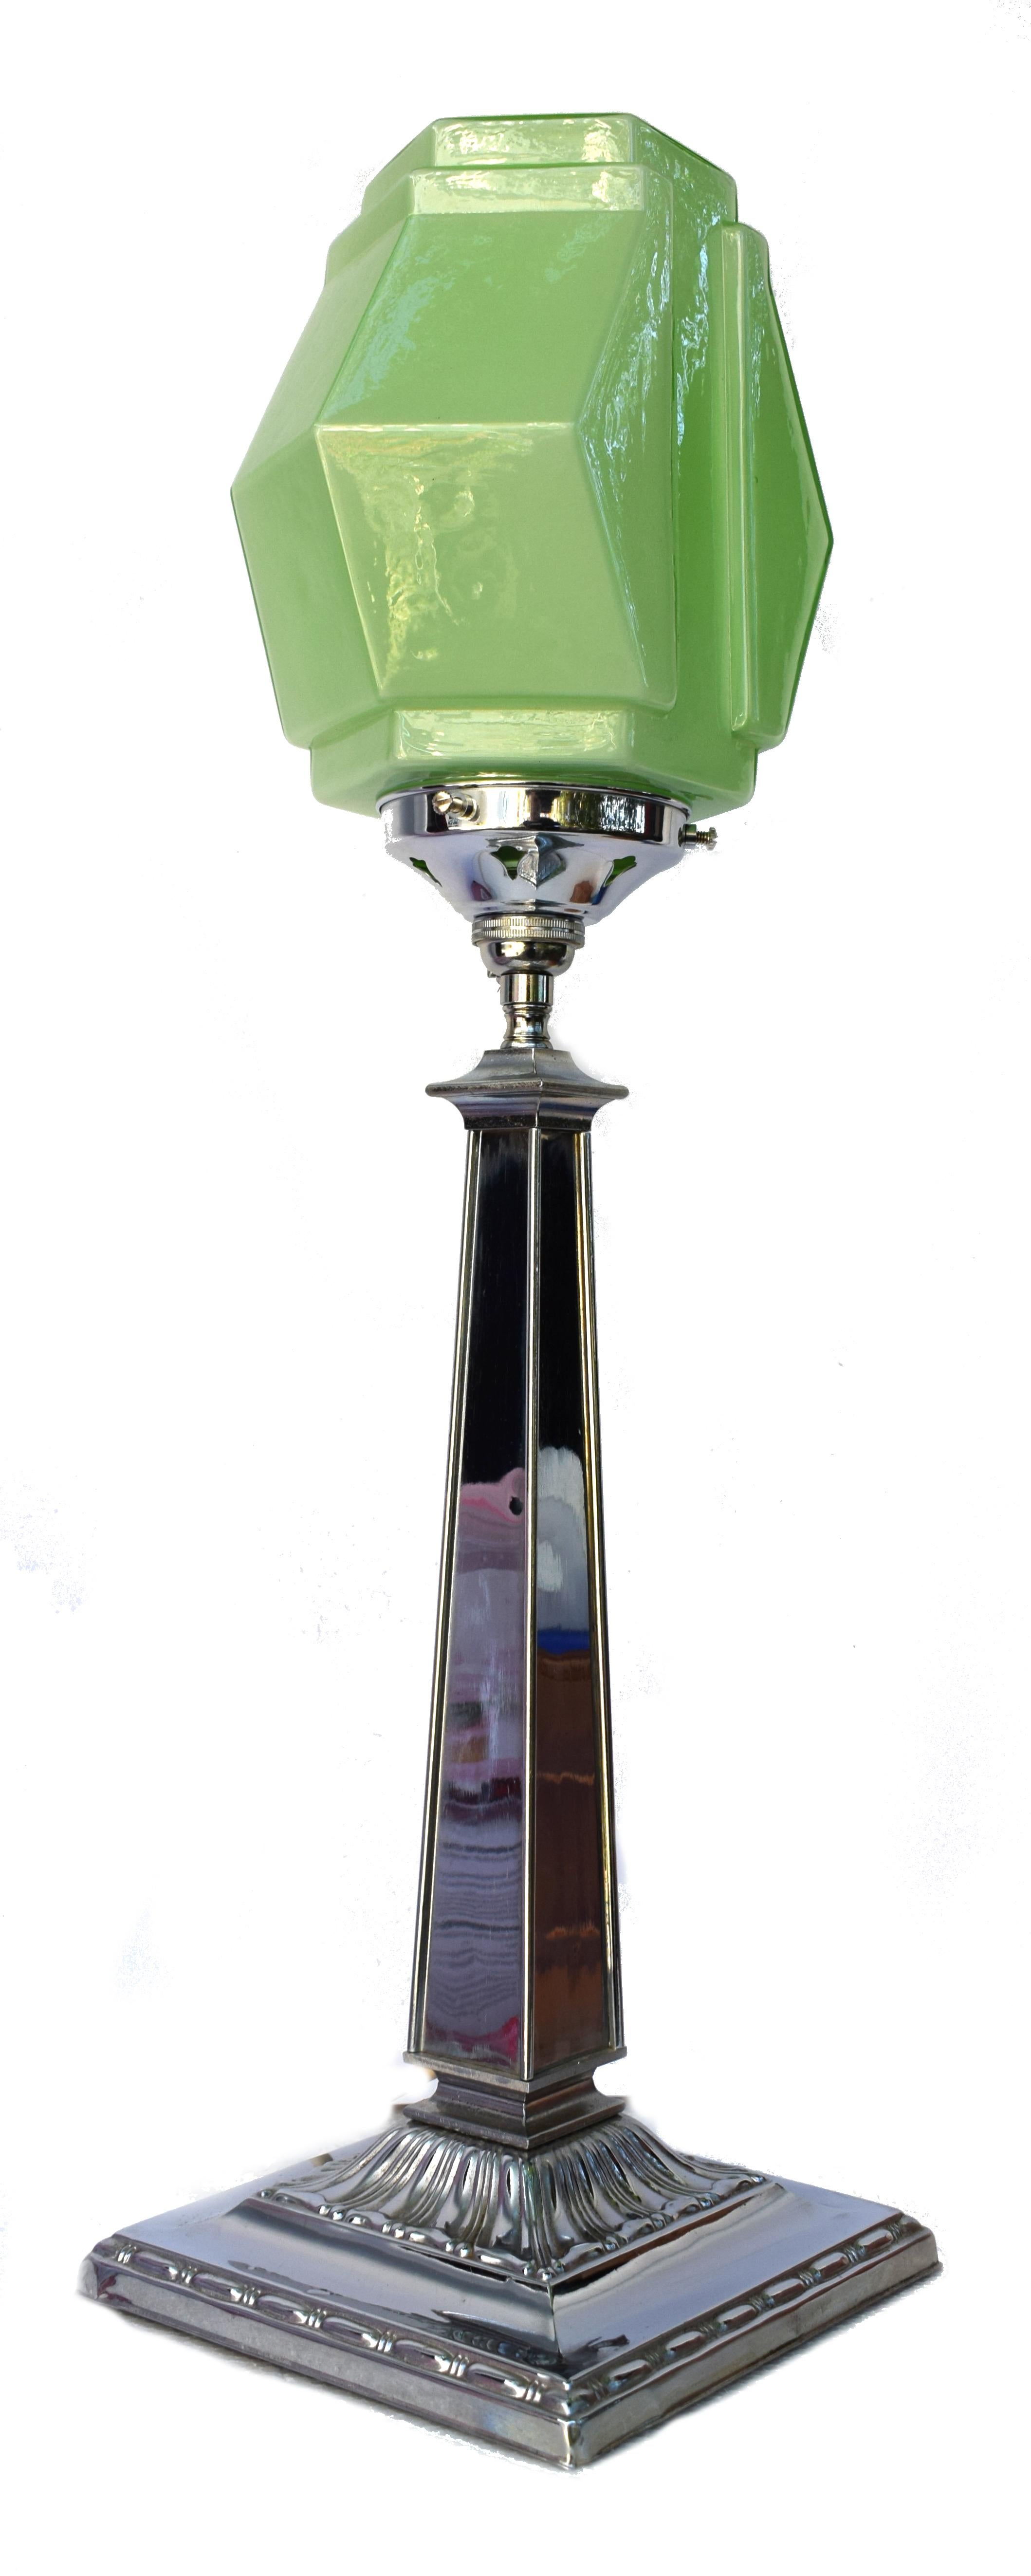 Brass Art Deco Chrome Lamp with Stylish Green Shade, circa 1930s